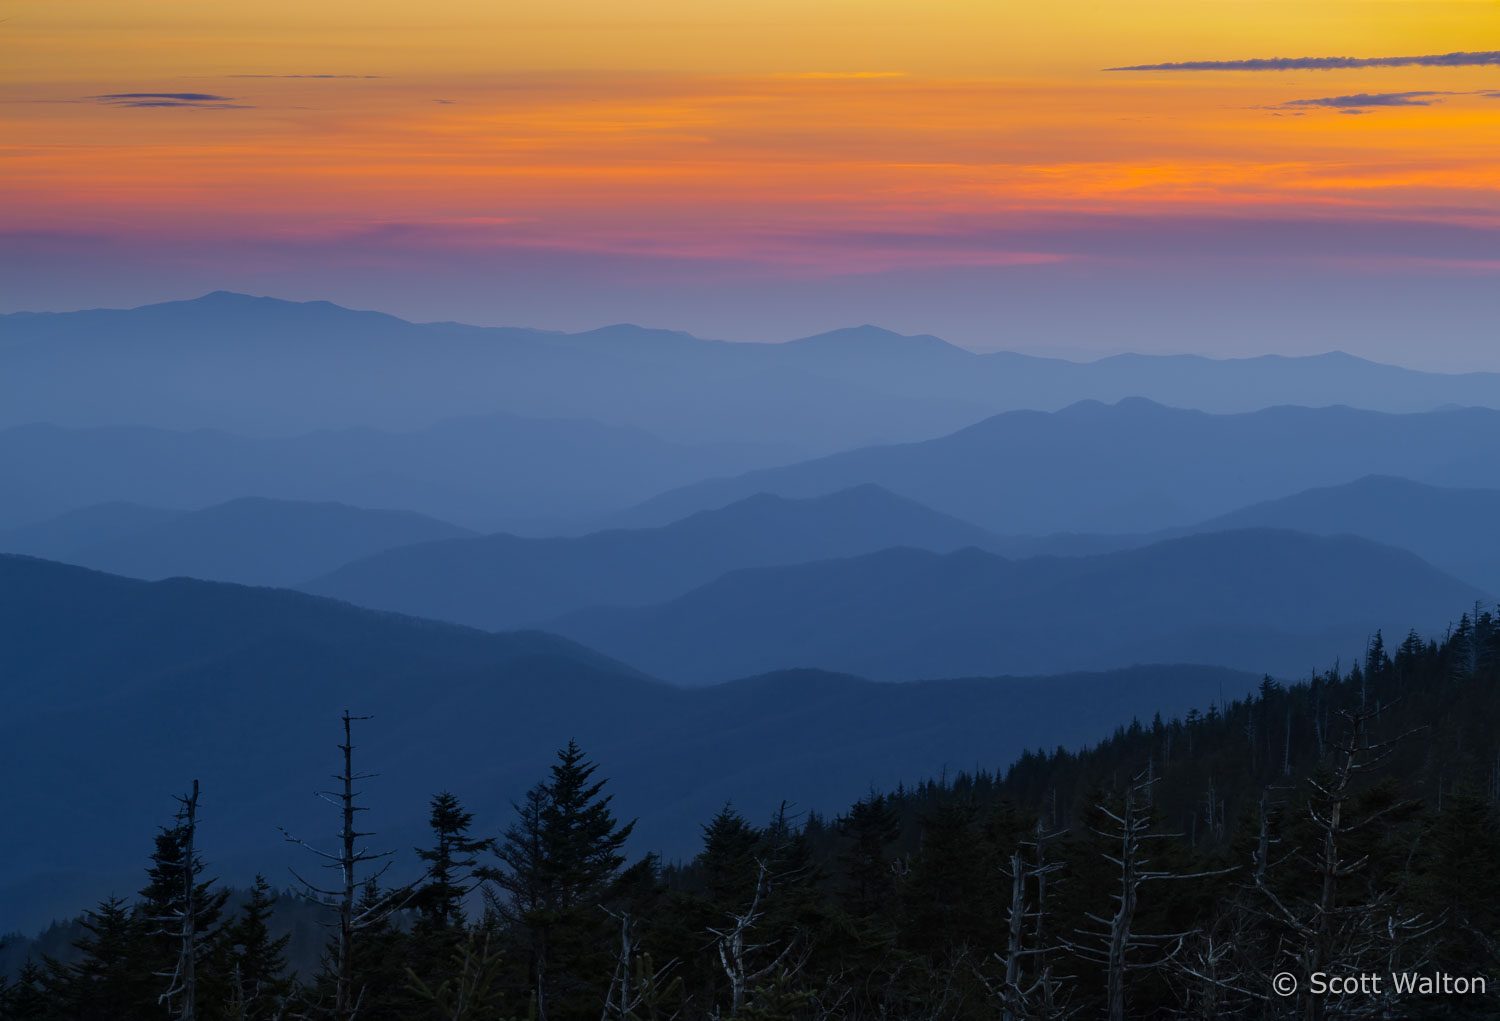 sunset-clingmans-dome-great-smoky-mountains-north-carolina.jpg